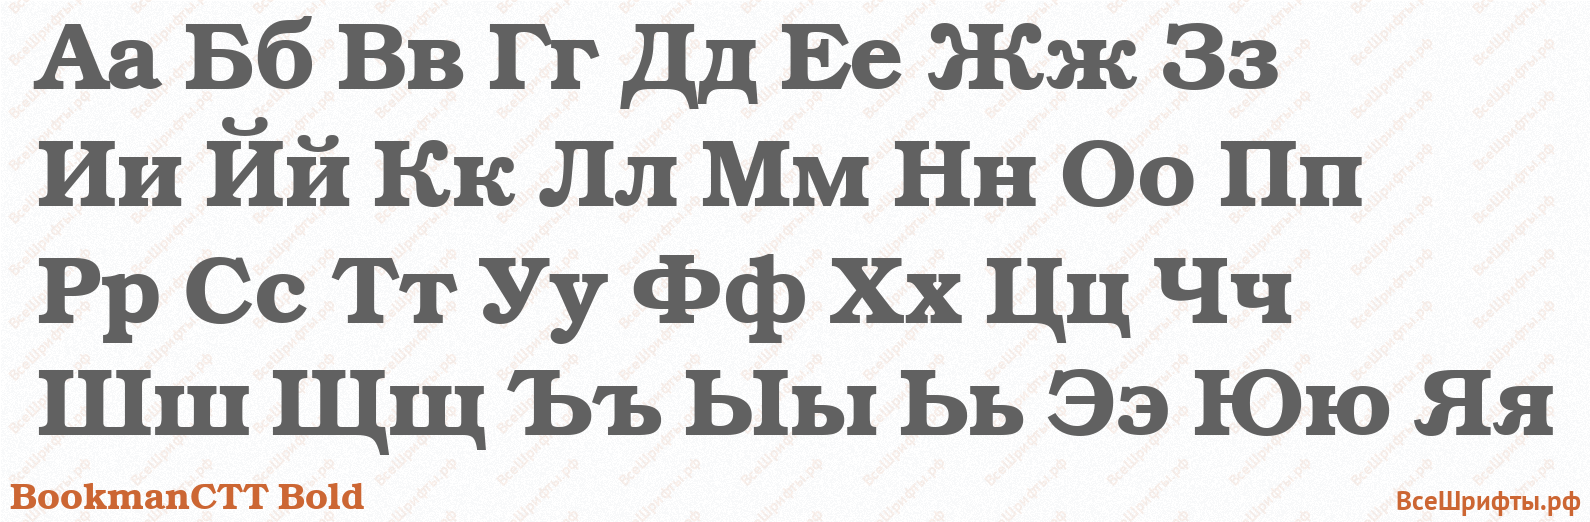 Шрифт BookmanCTT Bold с русскими буквами